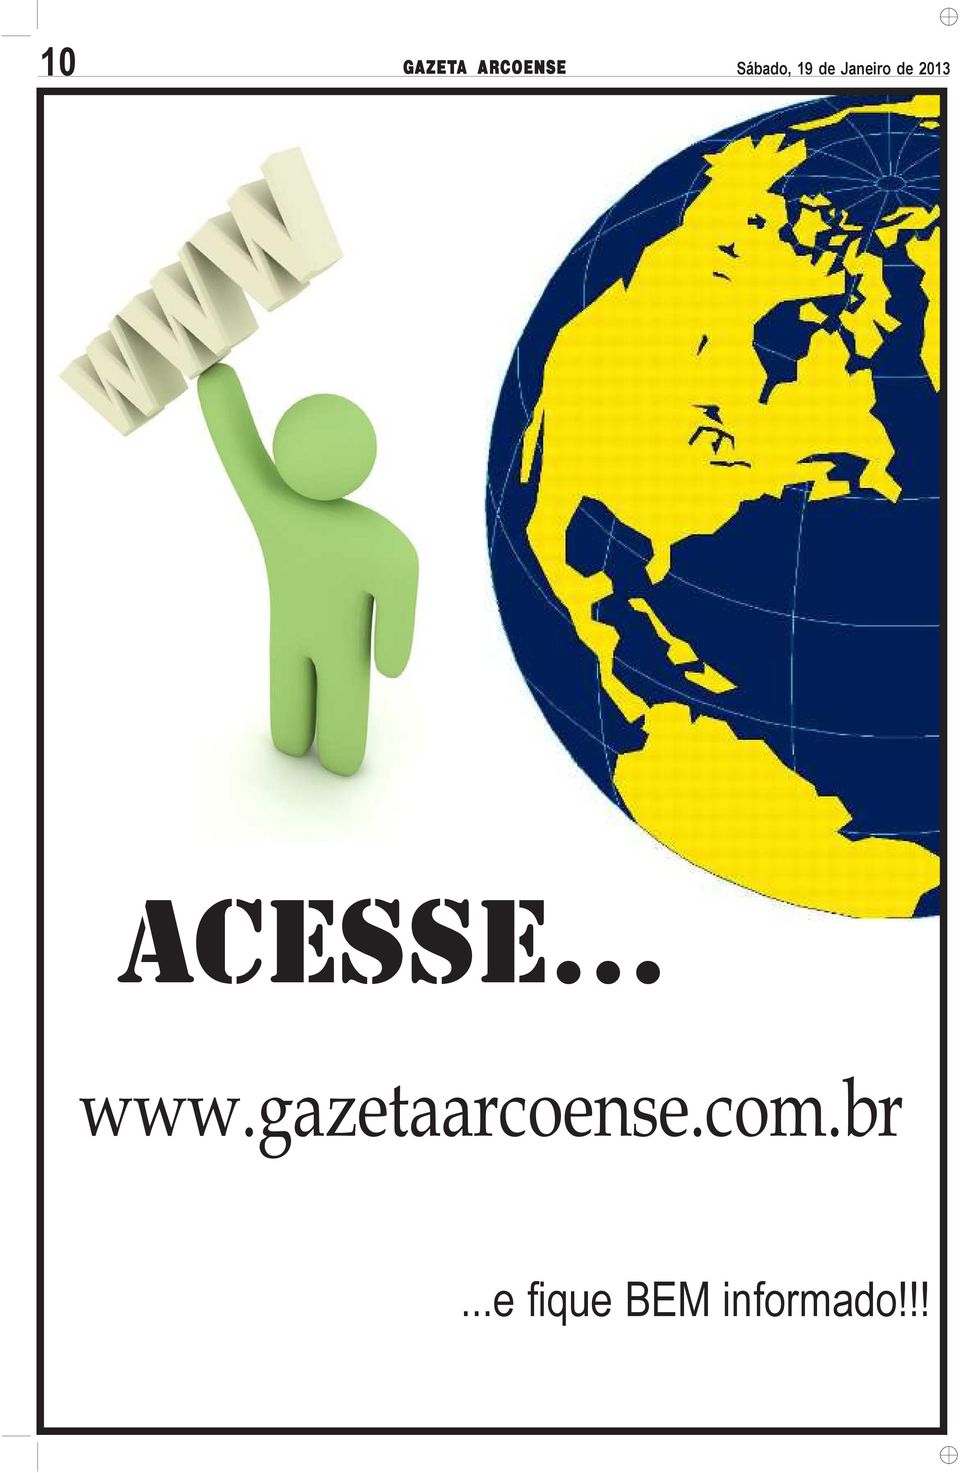 .. www.gazetaarcoense.com.br.